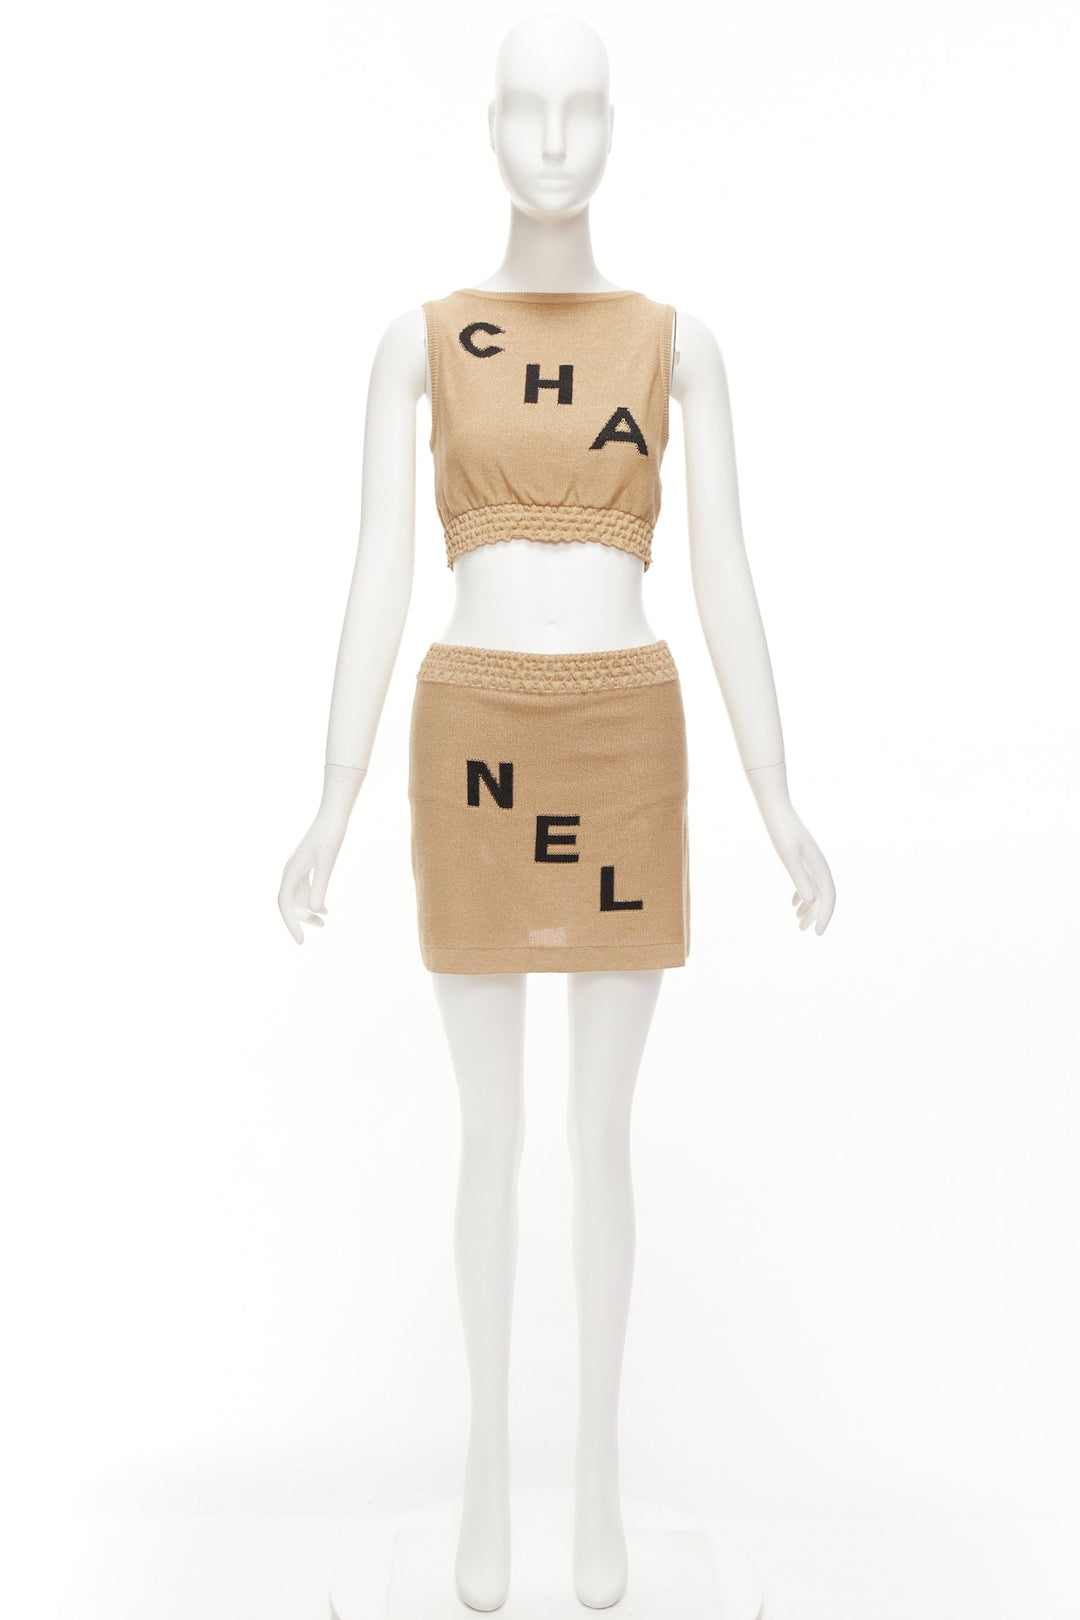 CHANEL 2019 Runway beige viscose paper LOGO crop top skirt set FR34 XS Kylie